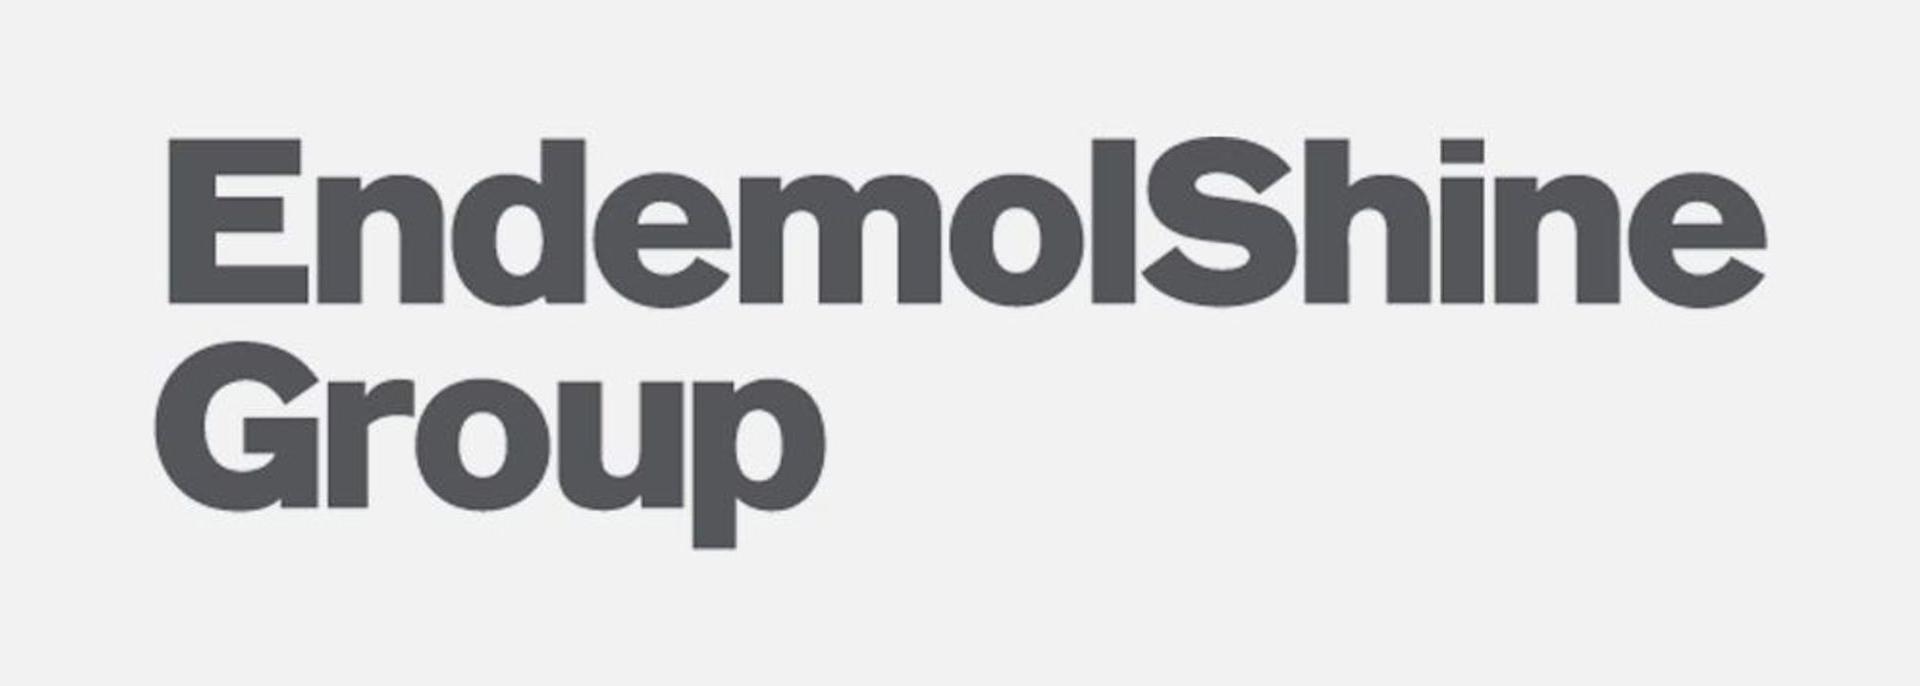 Endemol Logo - Endemol Shine Group - Story | Magnet.me